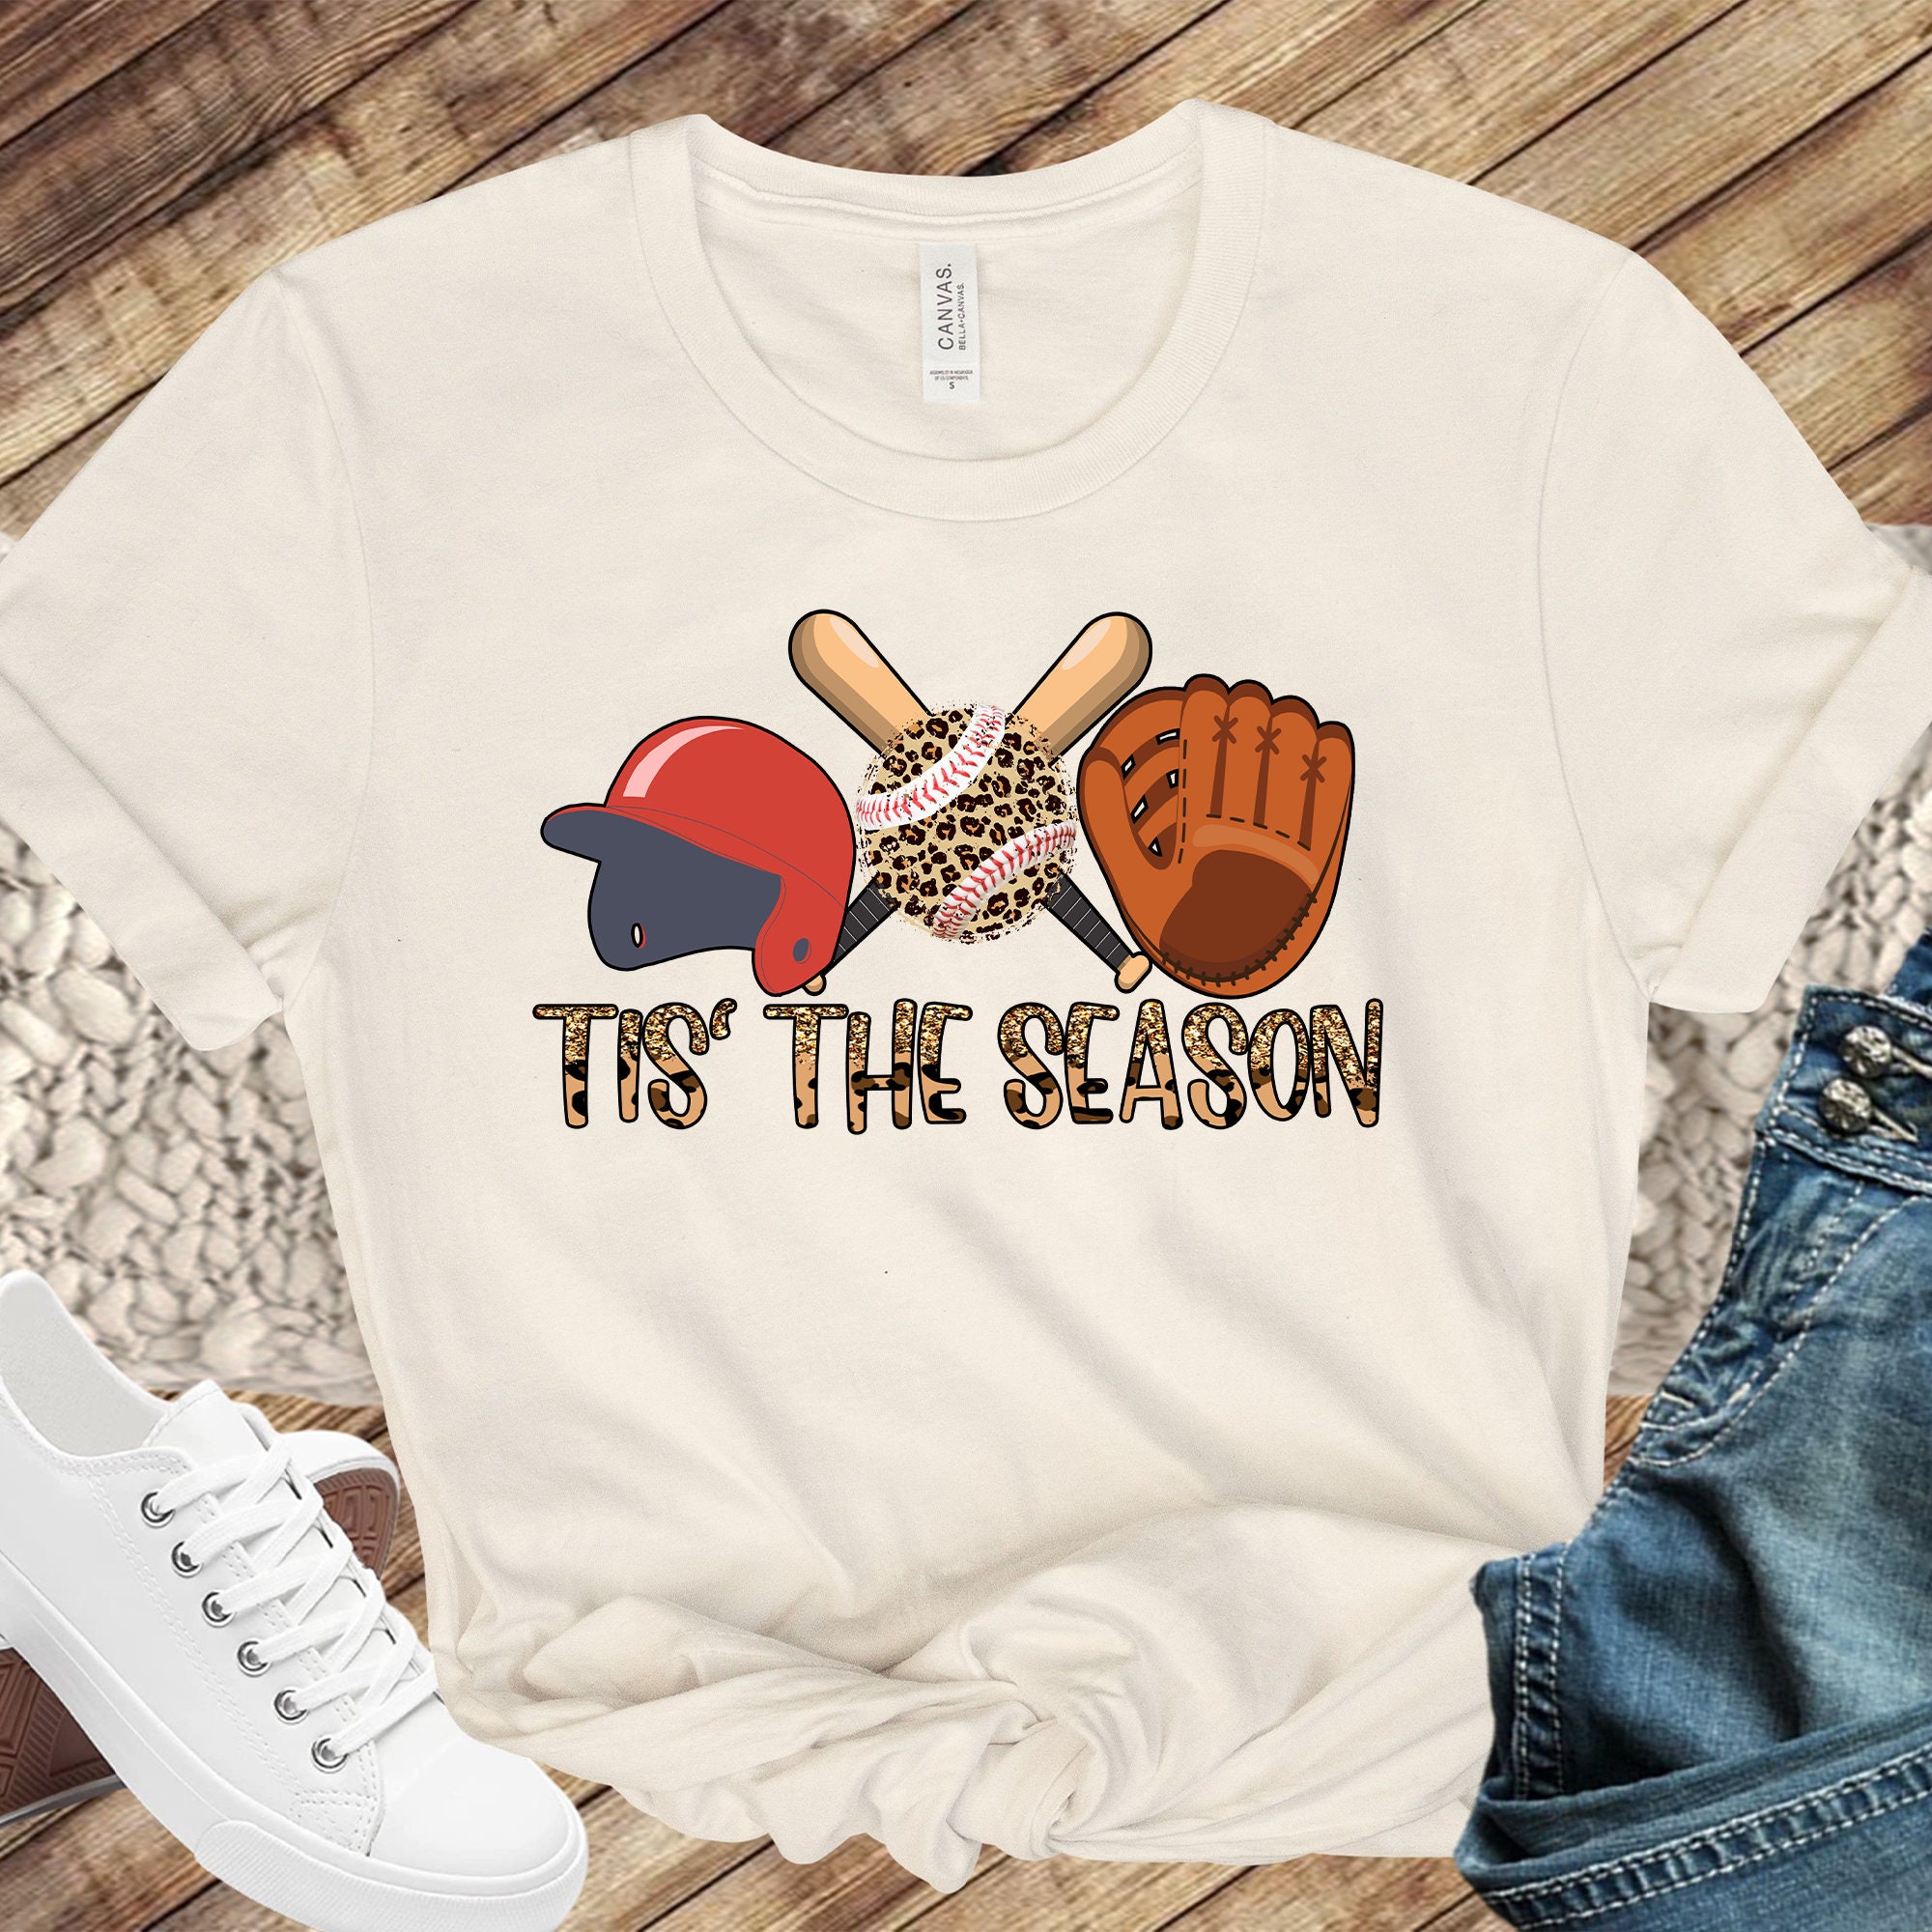 Discover Tis The Season T-shirt, Baseball Player T-Shirt